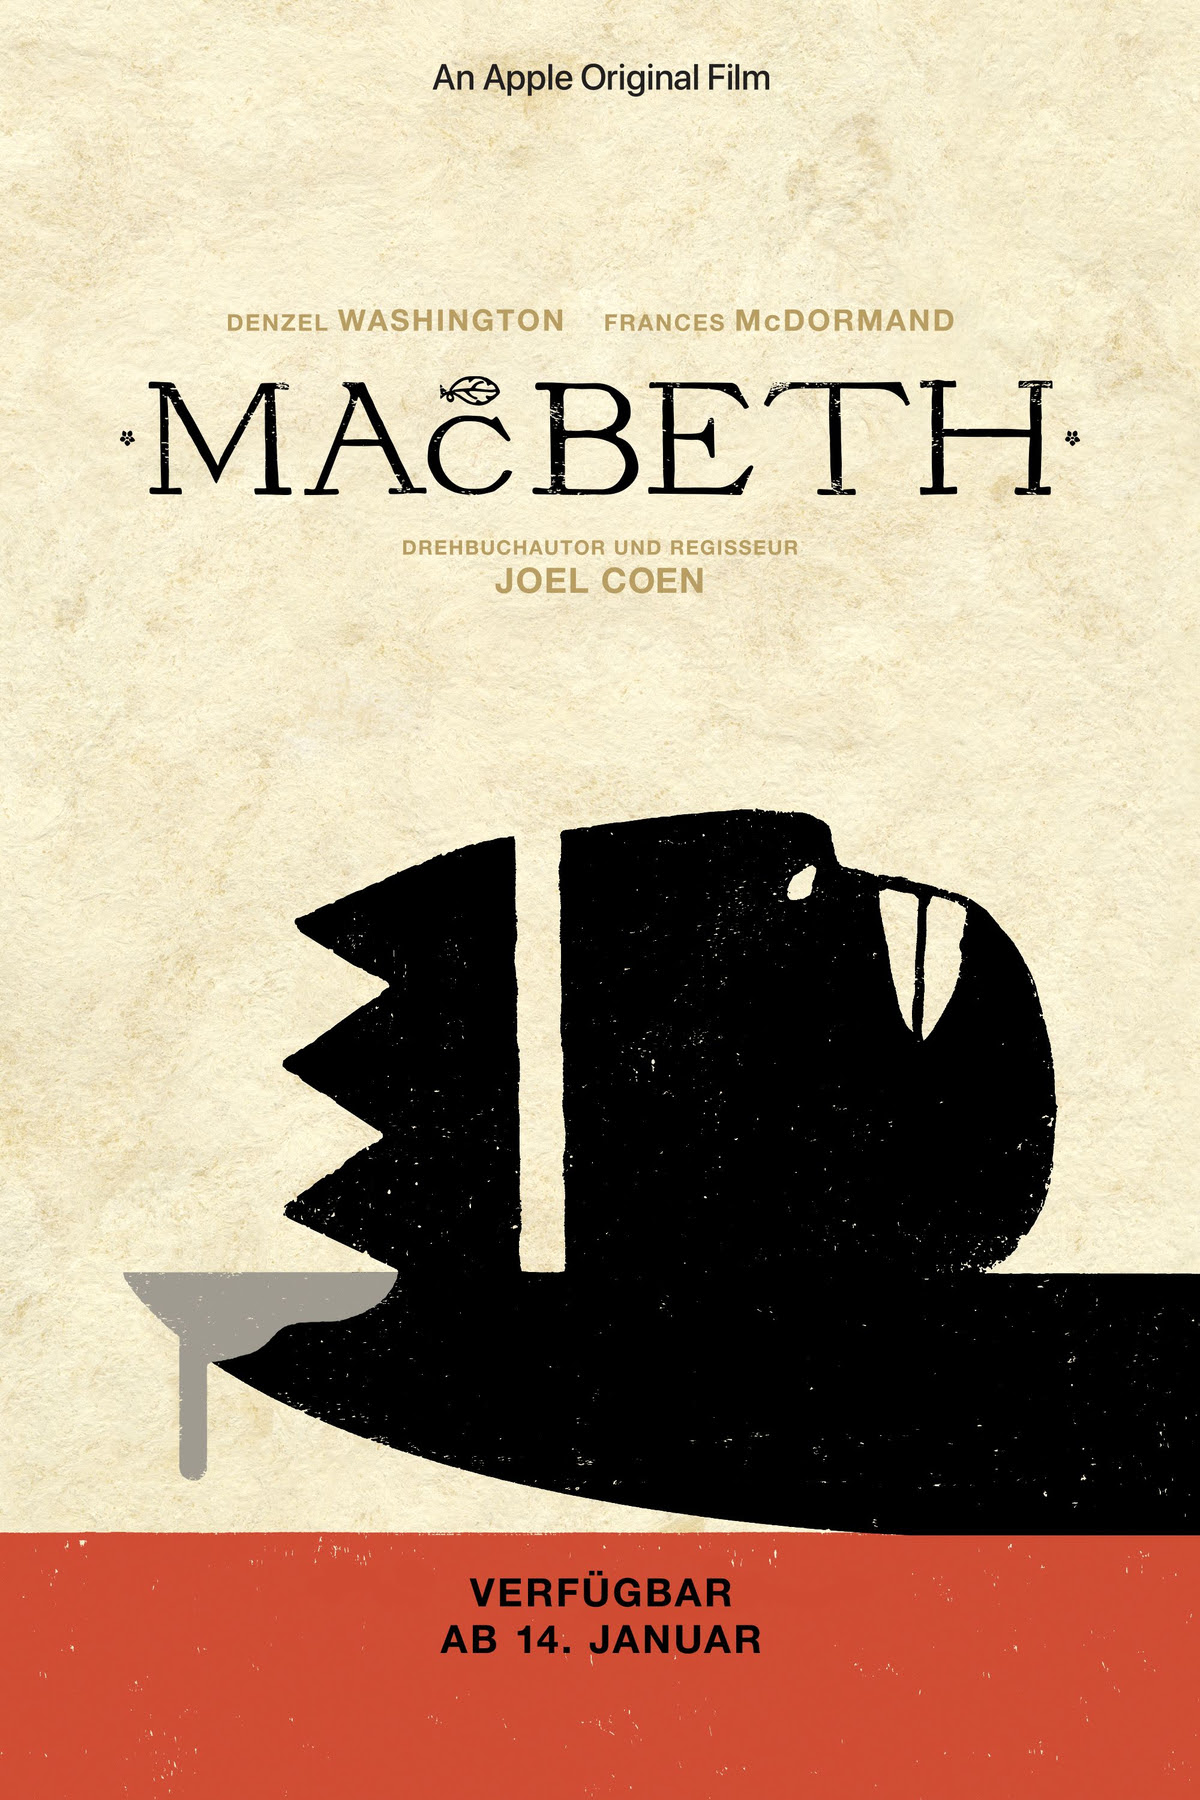 Neuer Trailer: "Macbeth" – ab 14. Januar auf Apple TV+